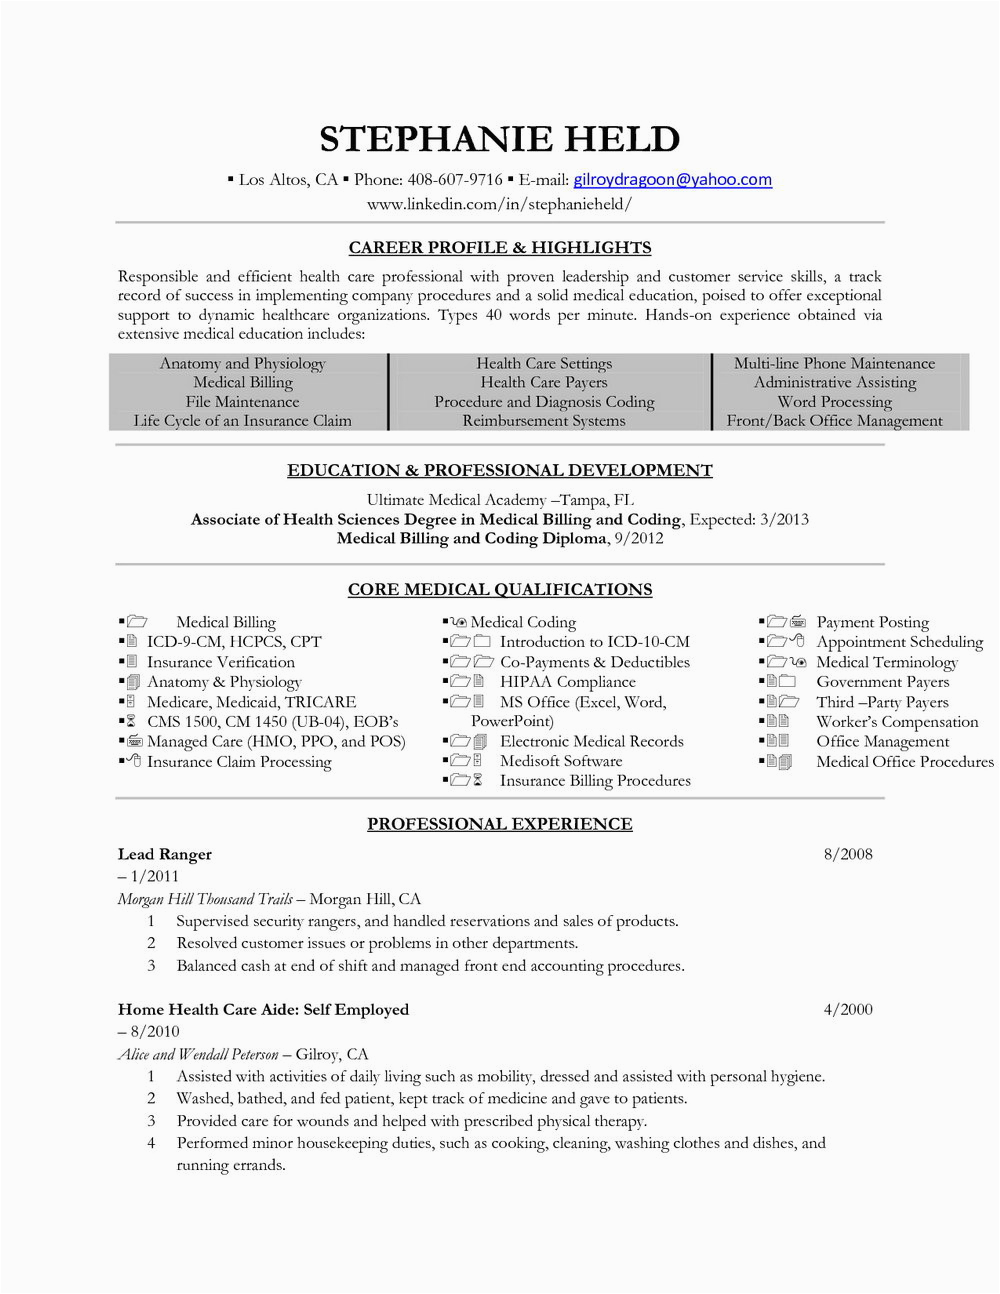 Entry Level Medical Billing and Coding Resume Sample Resume for Medical Billing and Coding Specialist